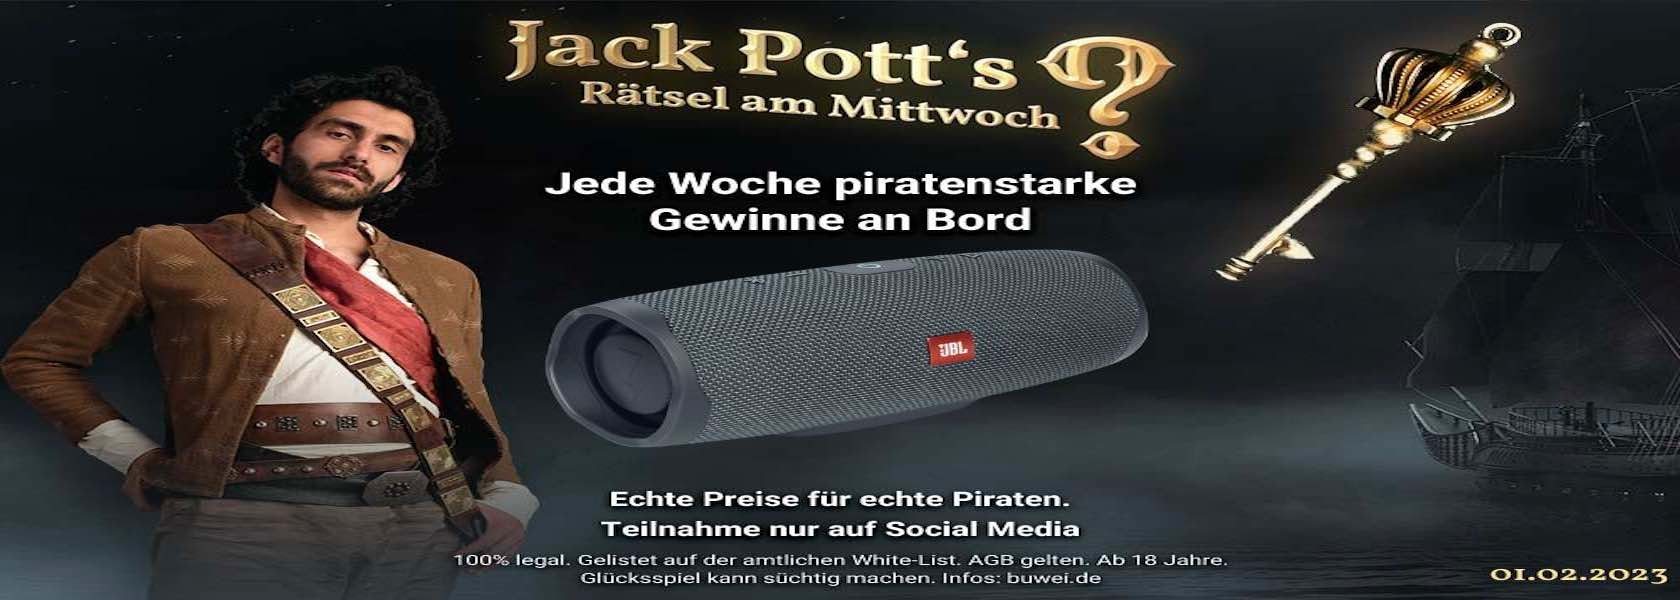 jack-potts-raetsel-am-mittwoch-01022023-1680x600